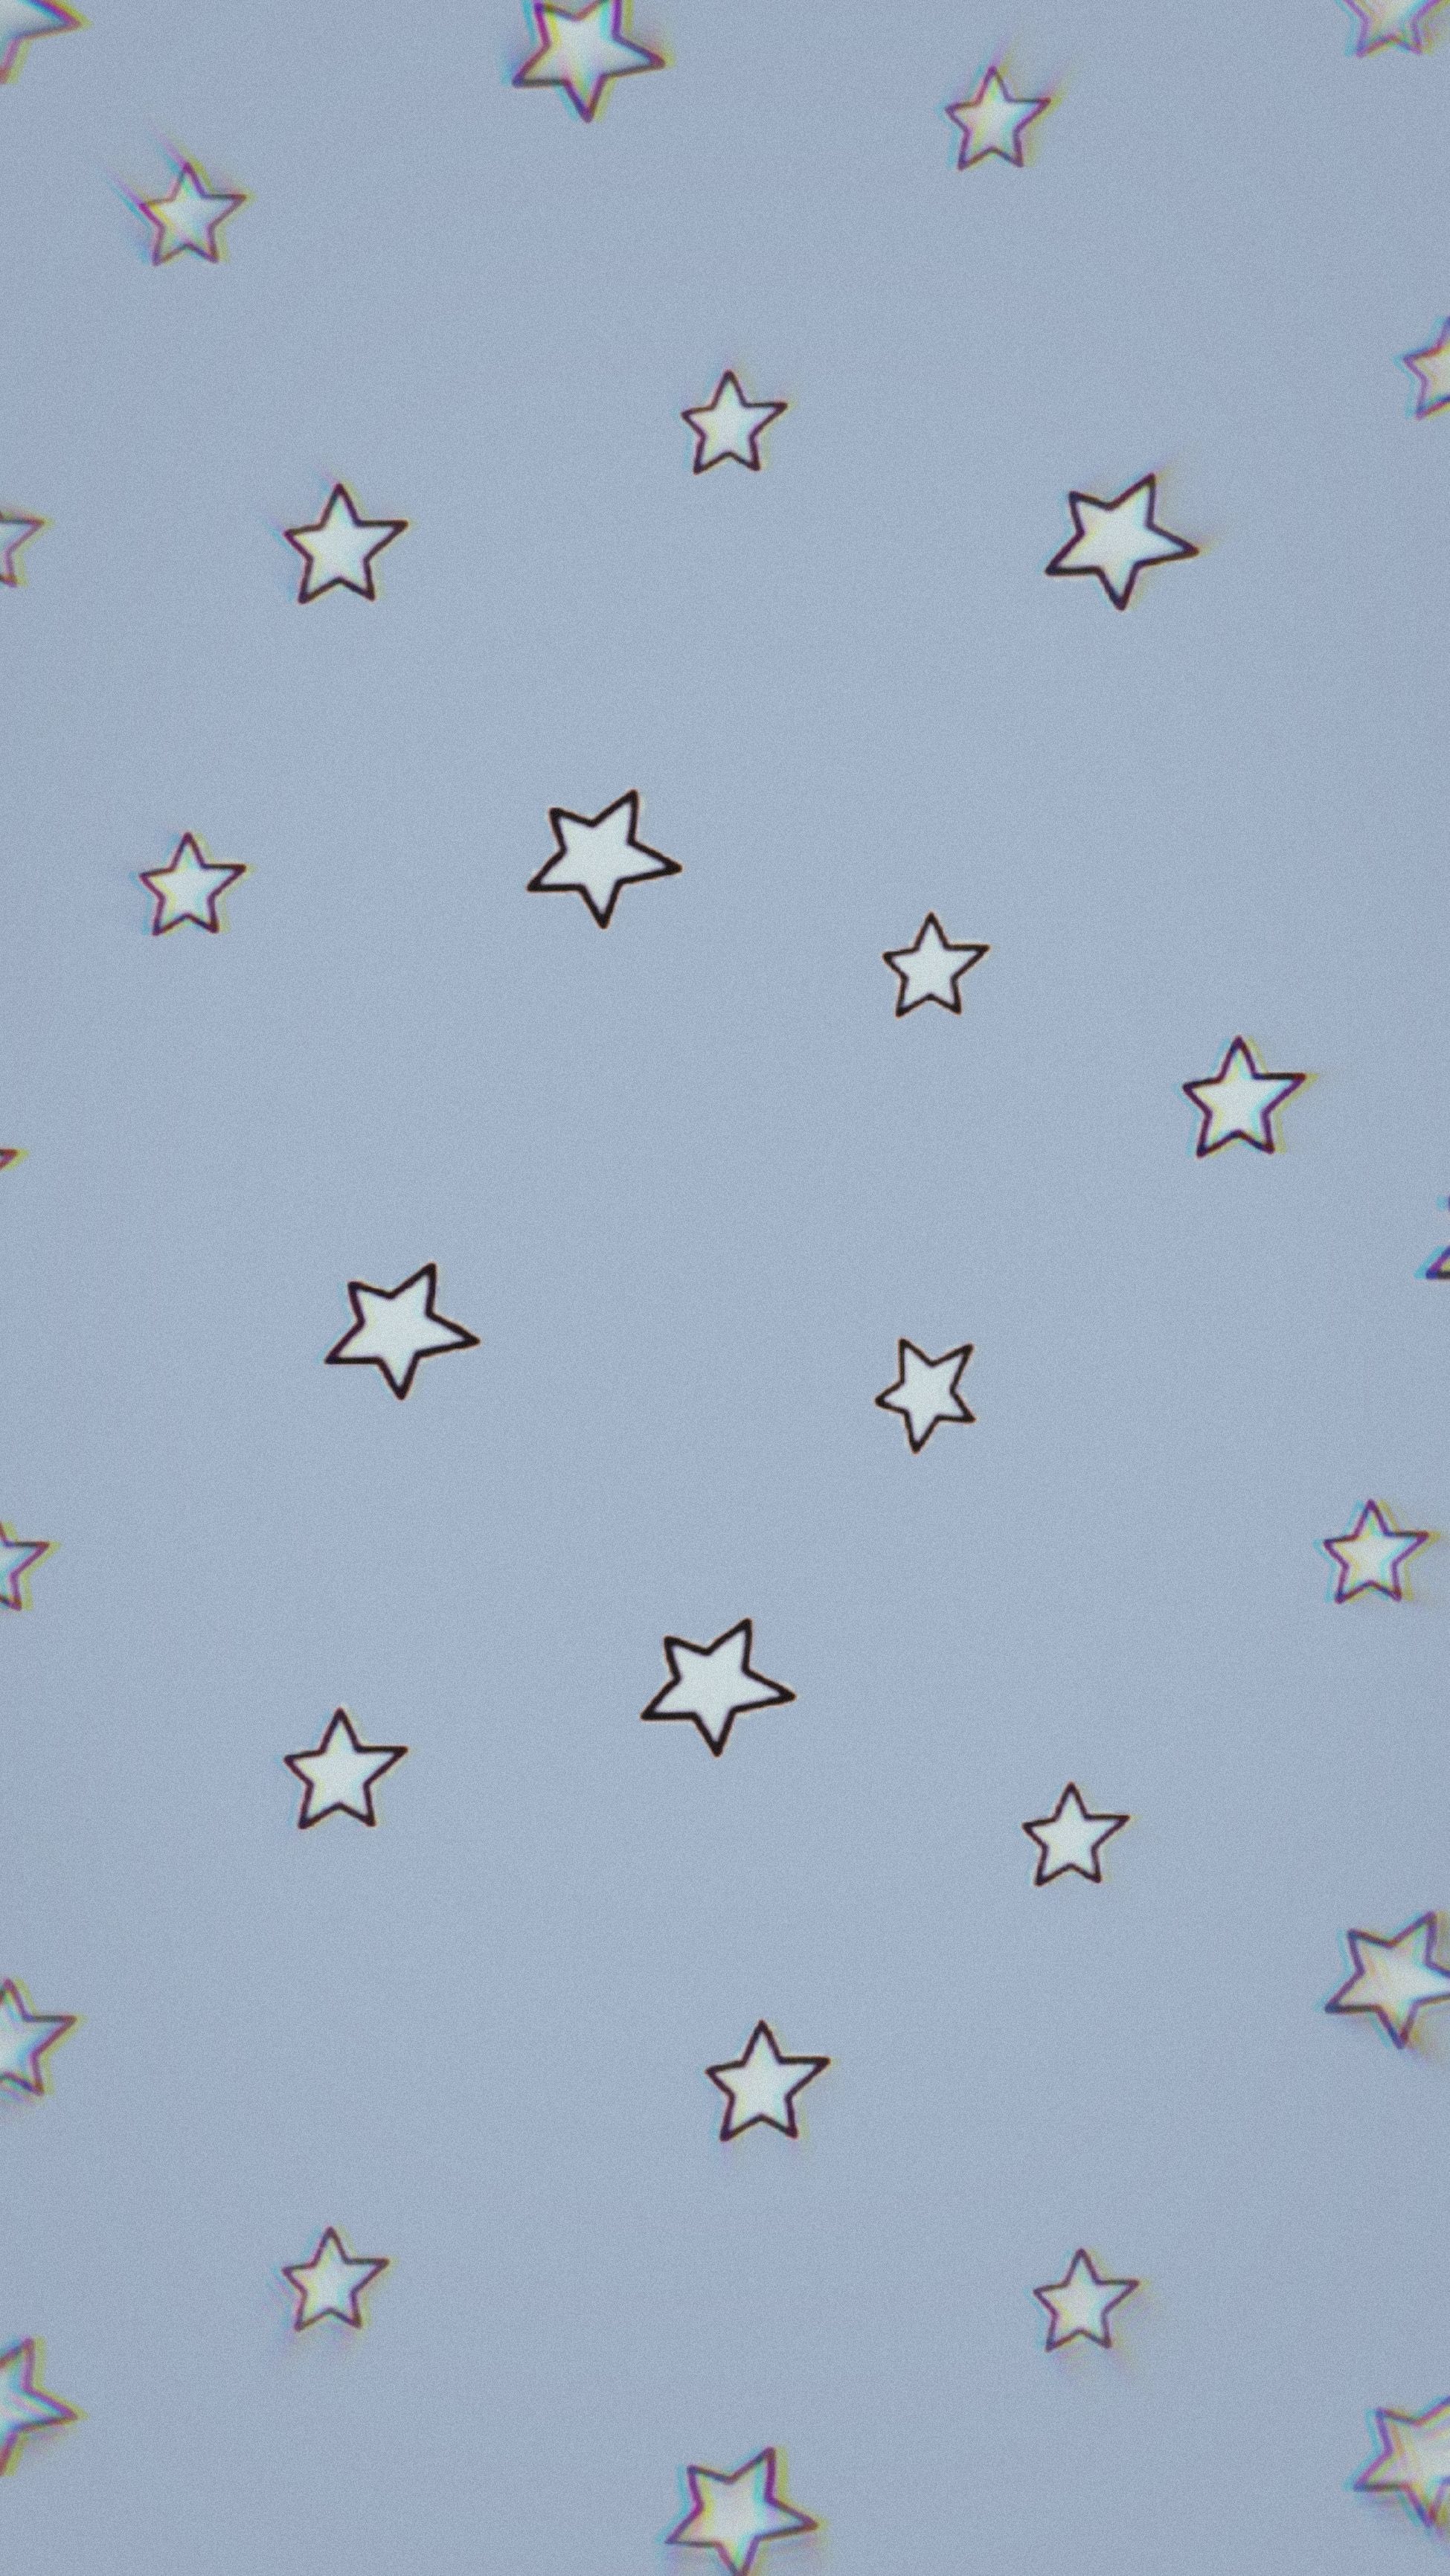 A blue sky with many white stars - Stars